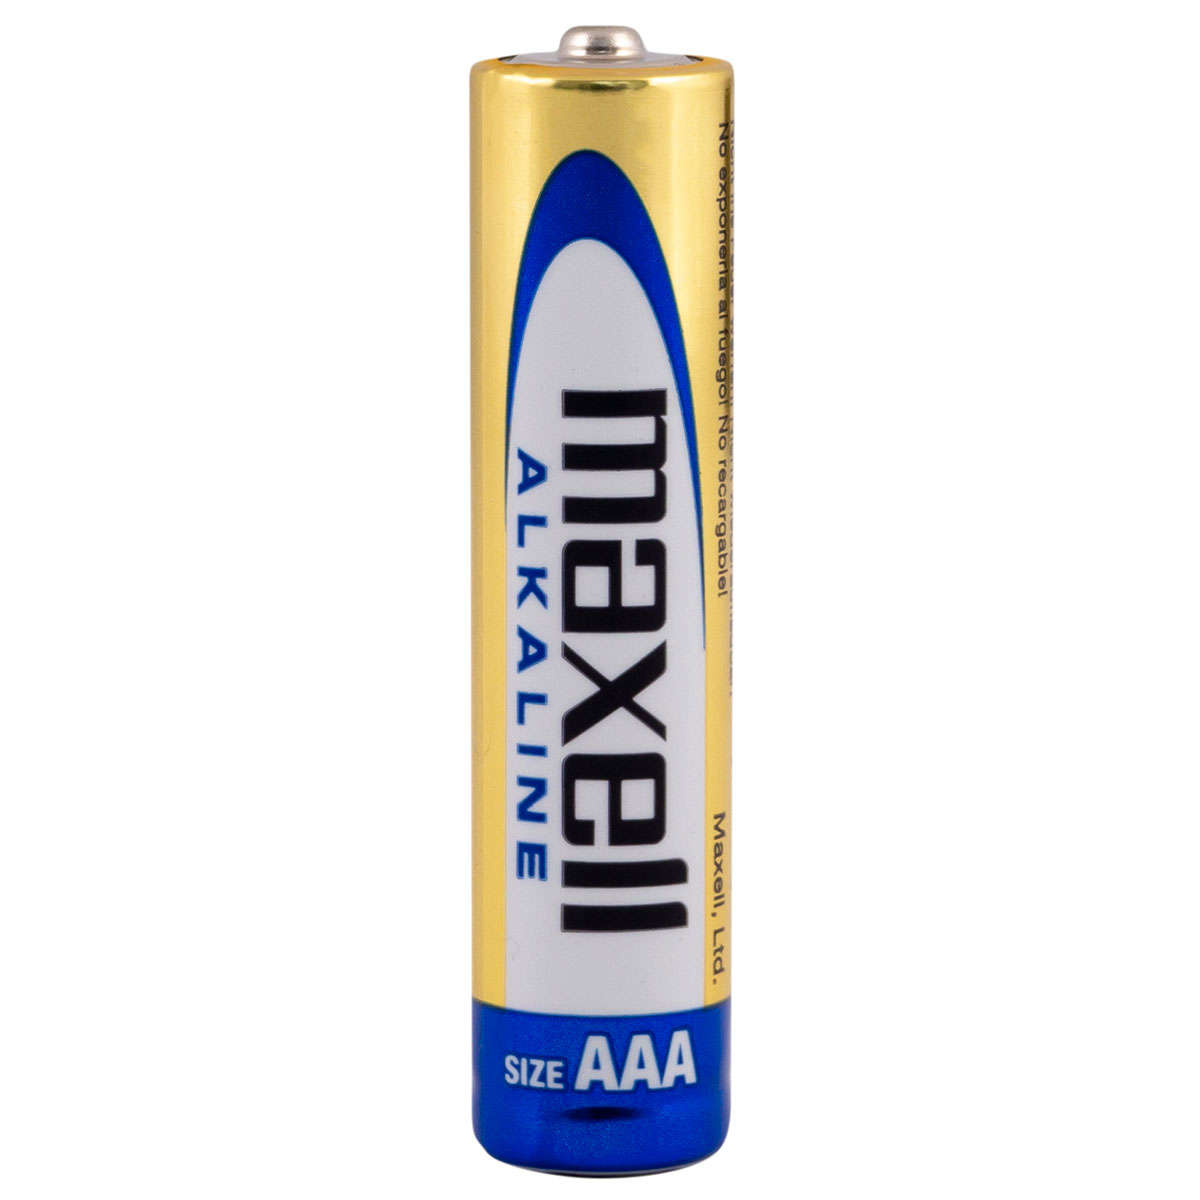 Maxell Alkaline LR03 AAA Micro 1,5 V batterij, 100 stuks in Box Pack